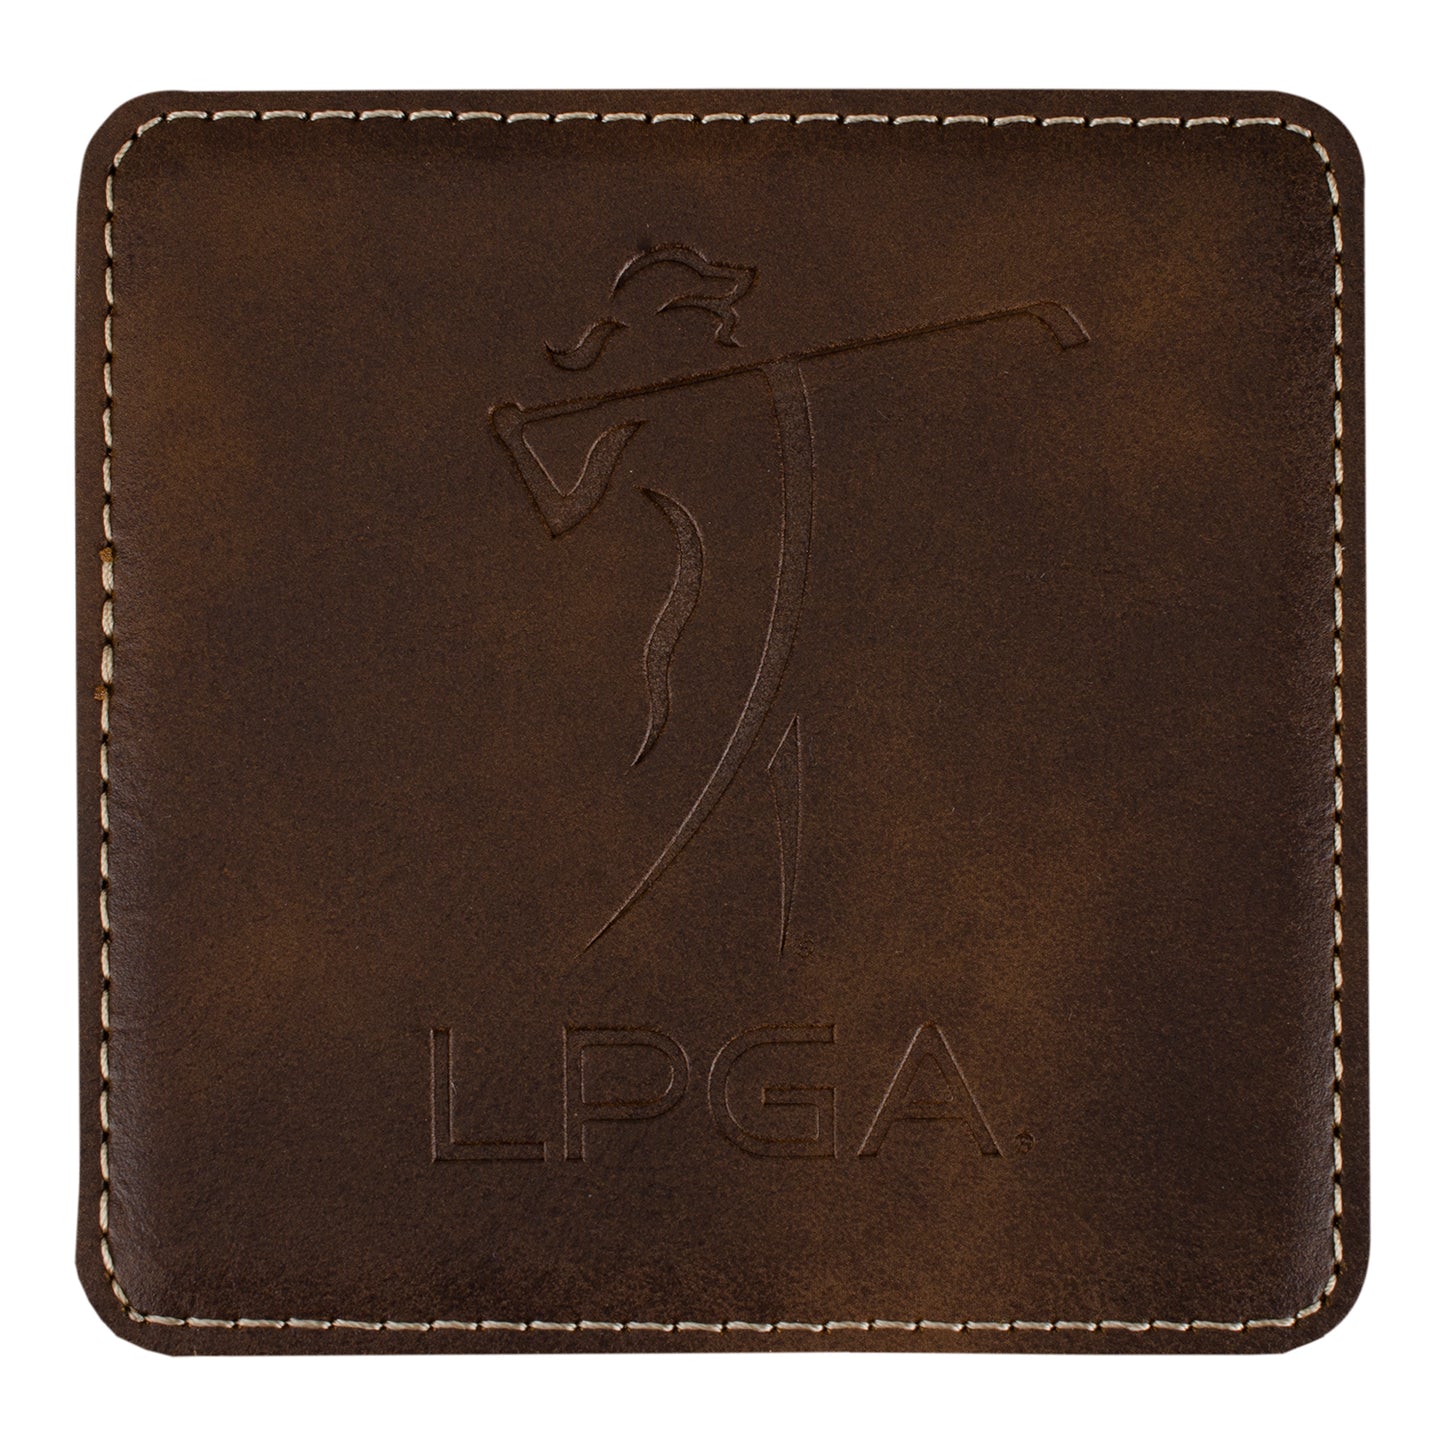 Tournament Solutions 2023 LPGA Leather Coaster